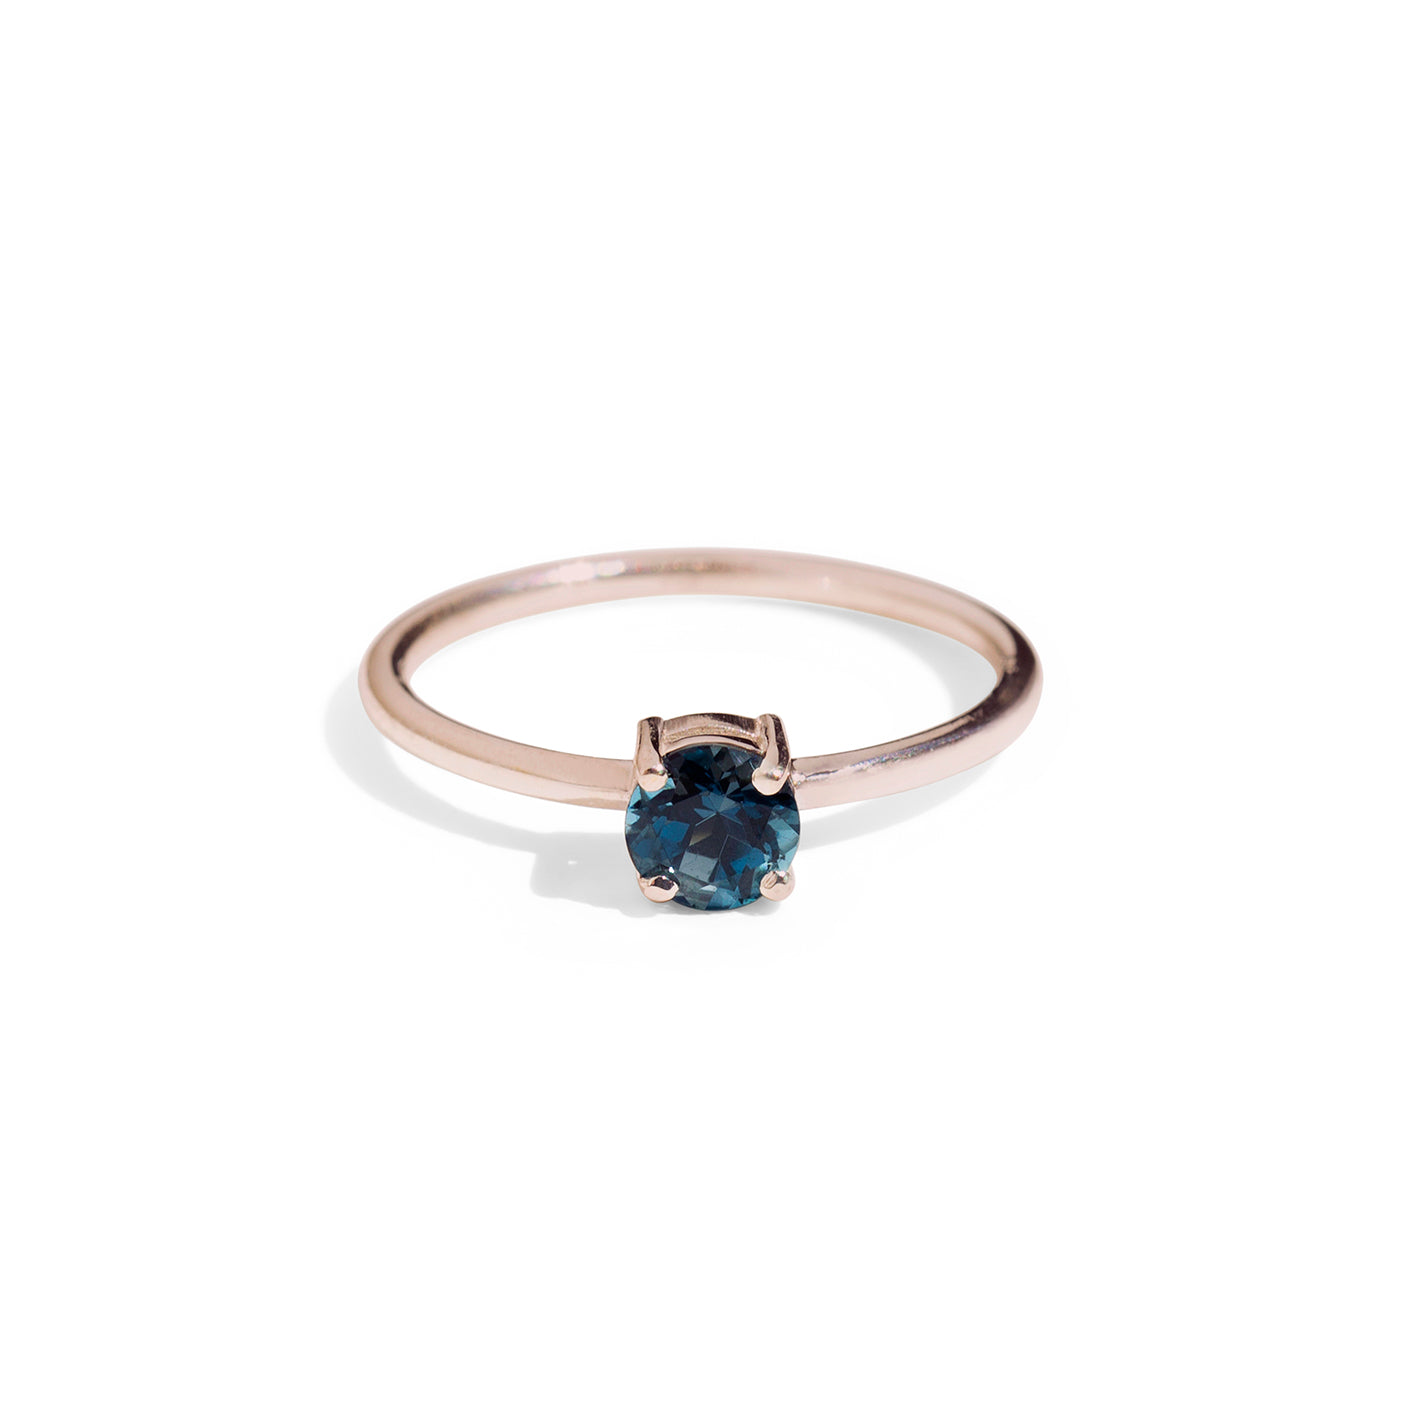 9ct gold luxury round london blue topaz ring